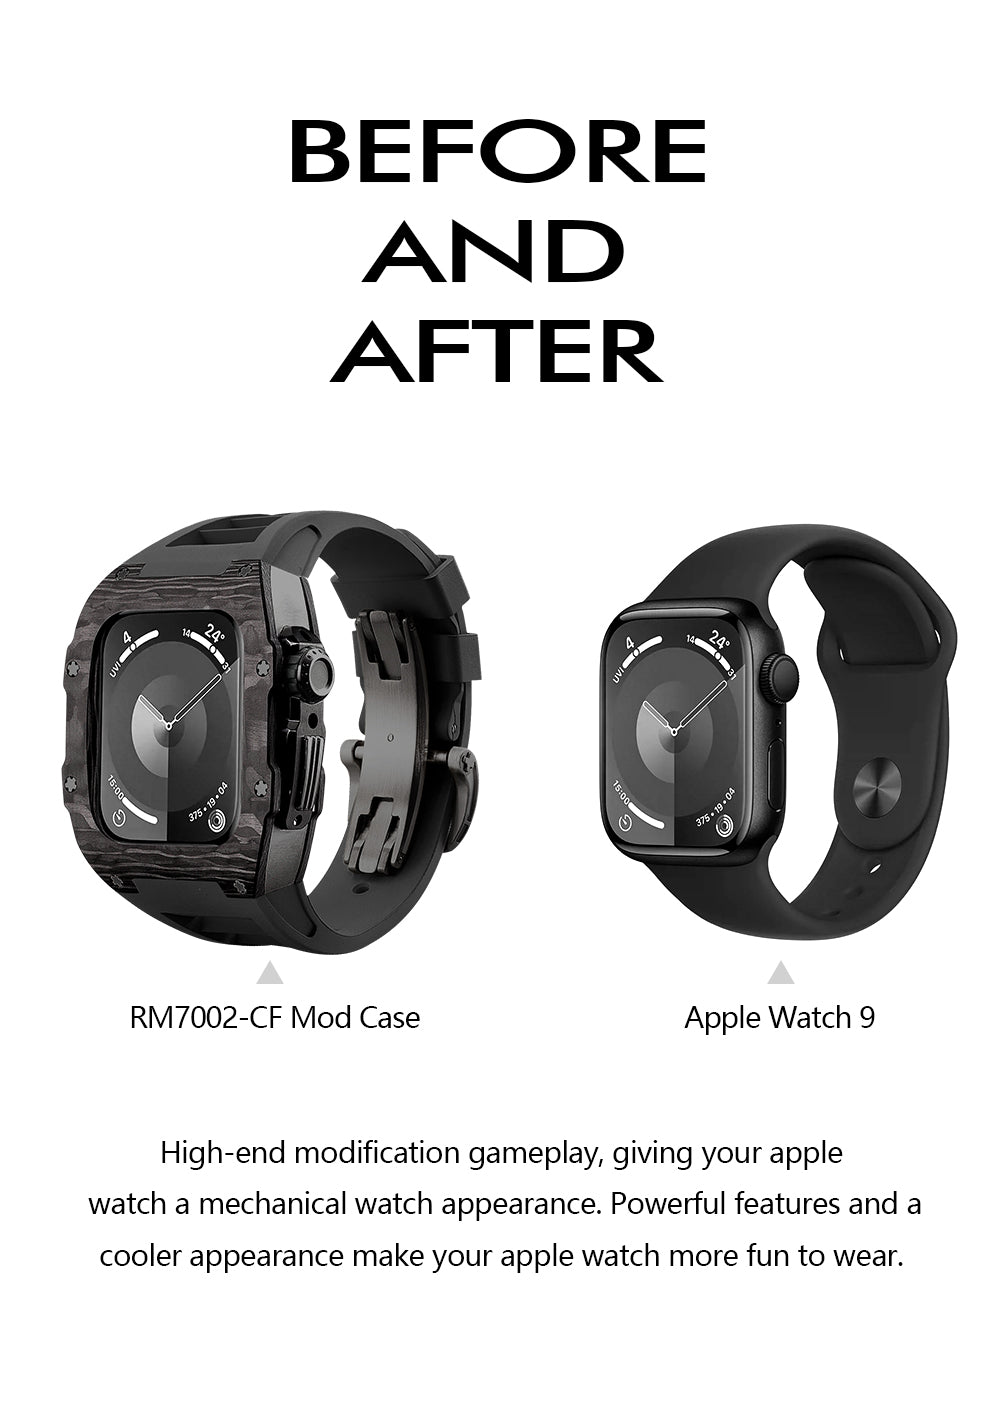 Apple Watch Case 44mm - Carbon Fiber Ti Black Case + Black Fluoro Strap (8 Screws)